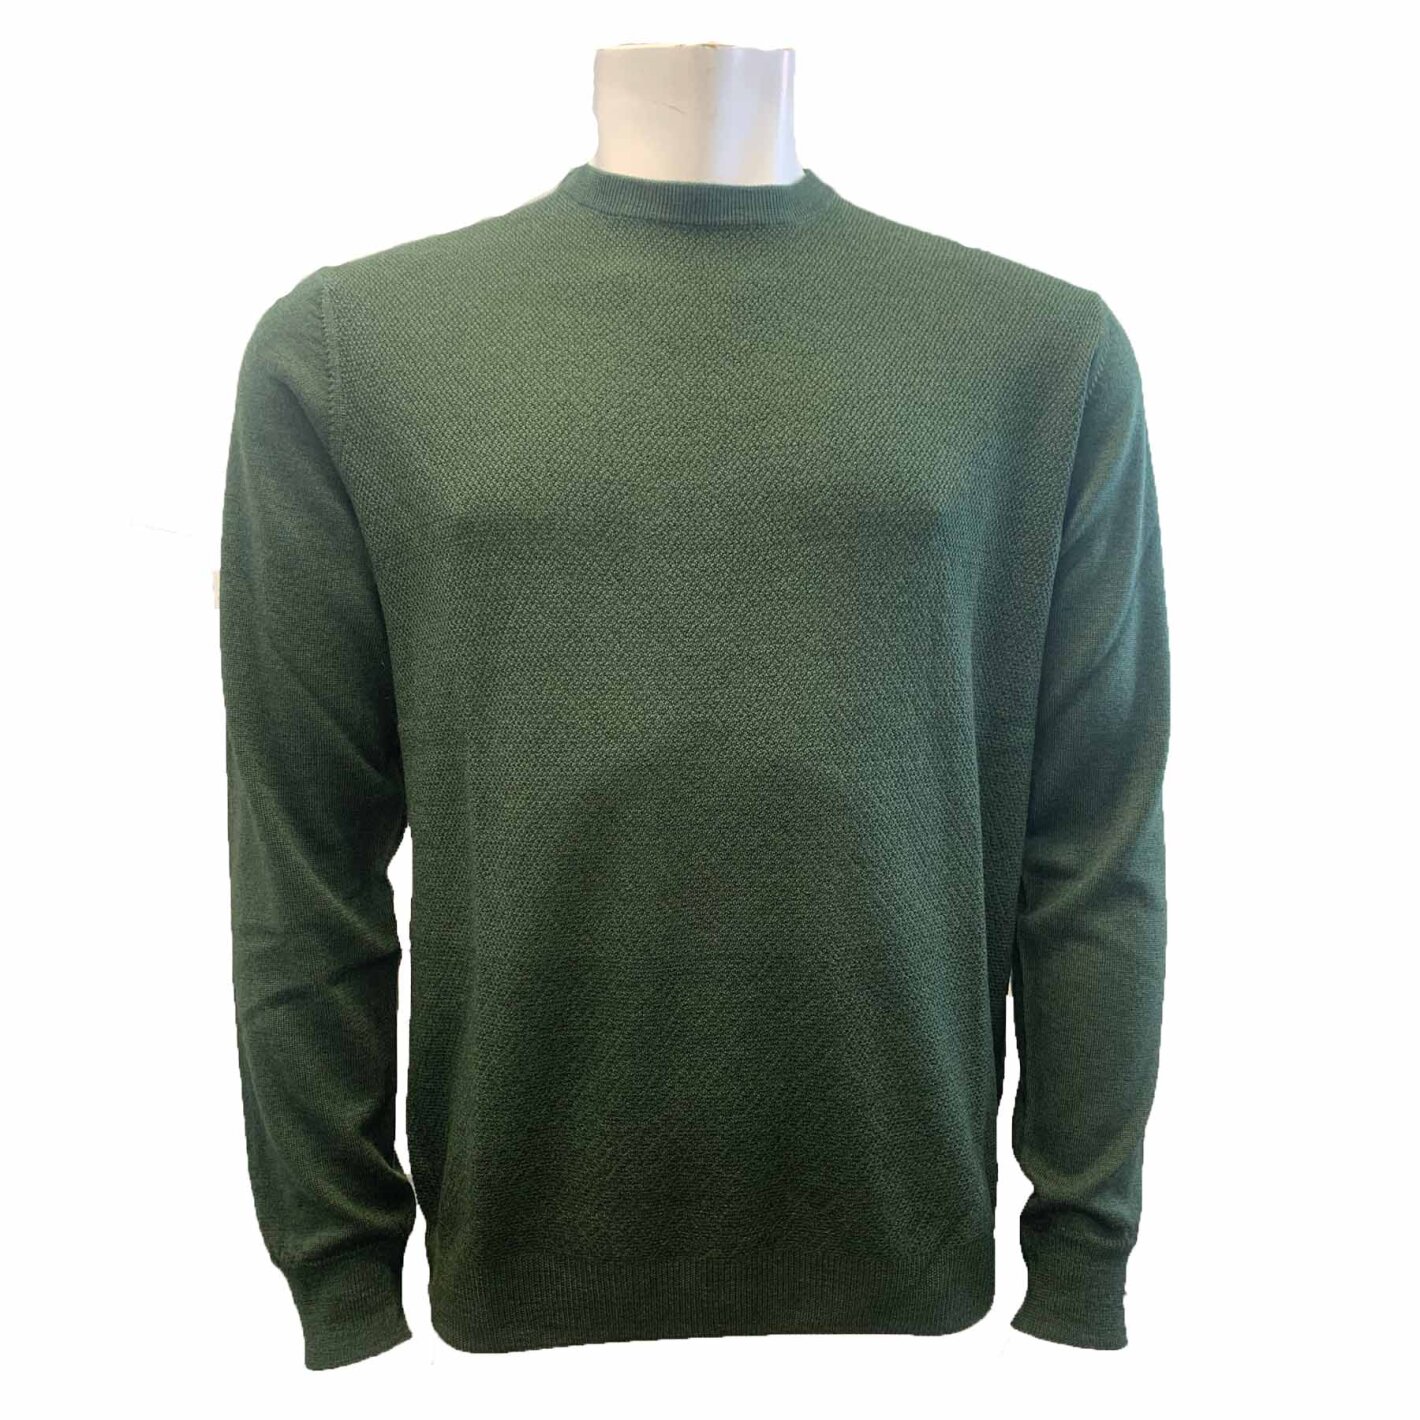 Limited Crew wool sweateri grøn - Levering 1-2 hverdage